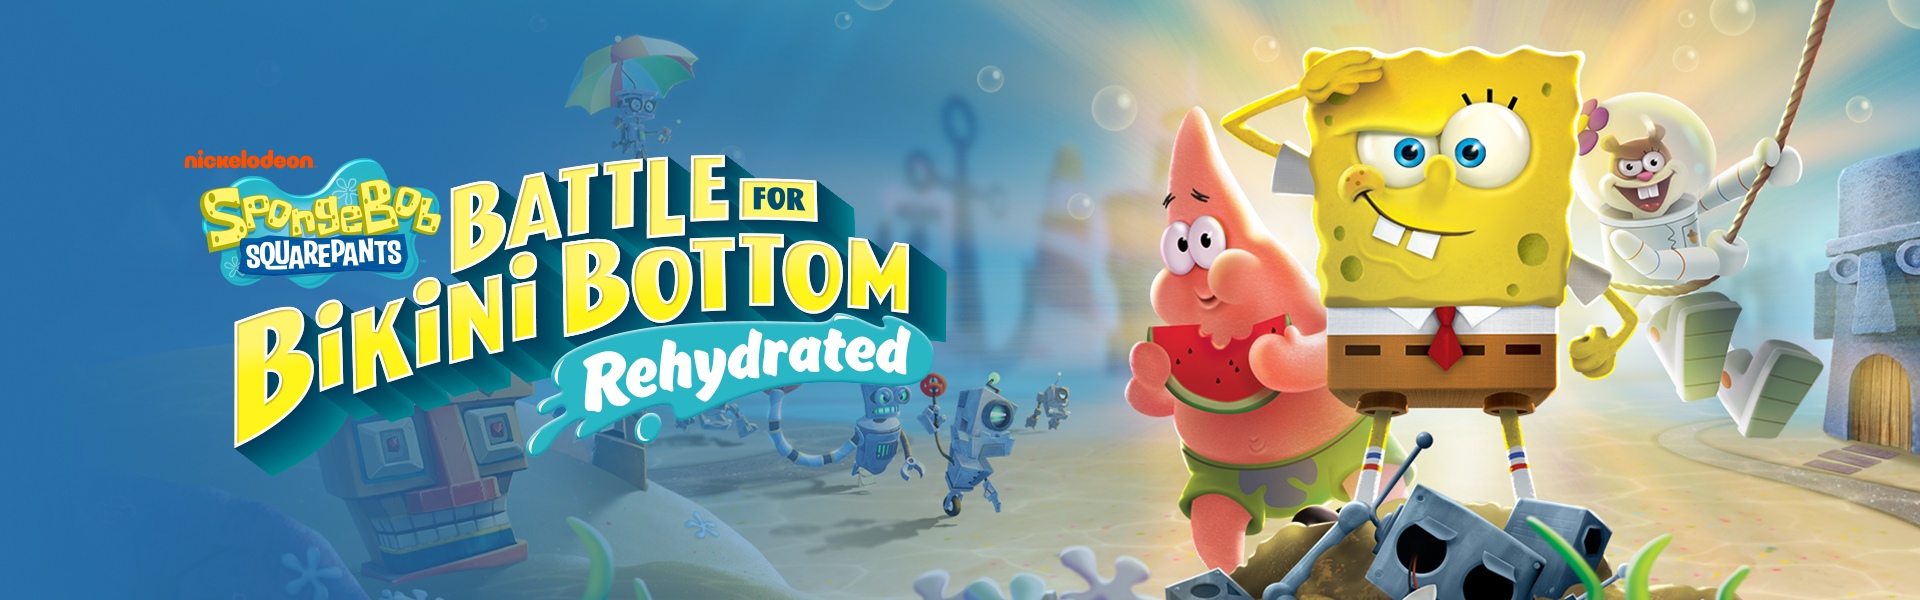 SpongeBob SquarePants: Bottom Bikini GmbH Battle for THQ Rehydrated - | Nordic